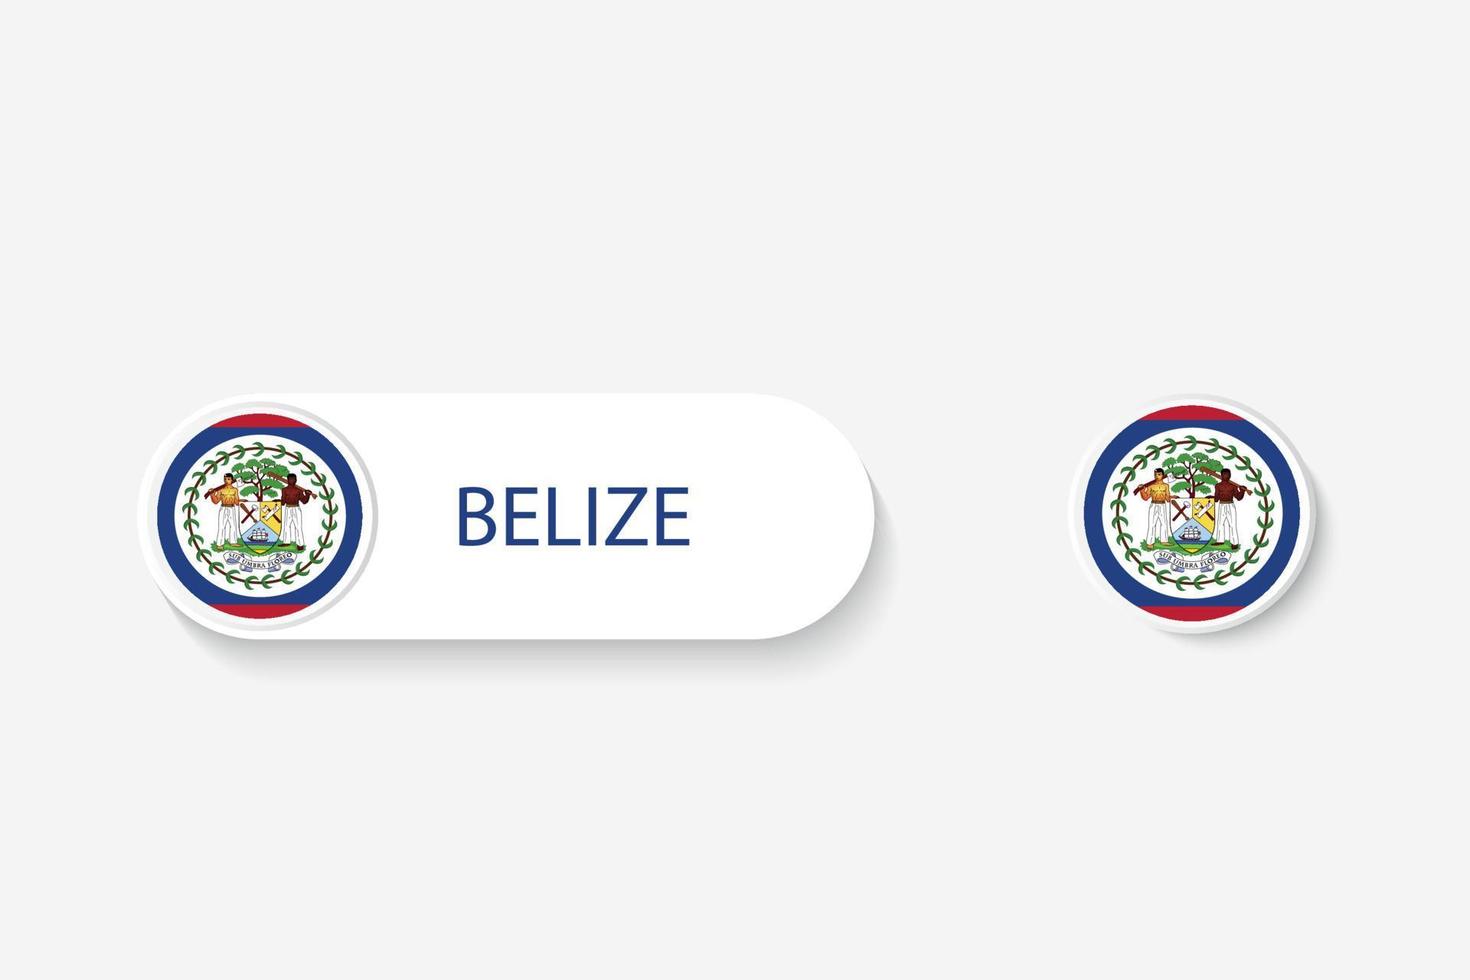 Belize button flag in illustration of oval shaped with word of Belize. And button flag Belize. vector